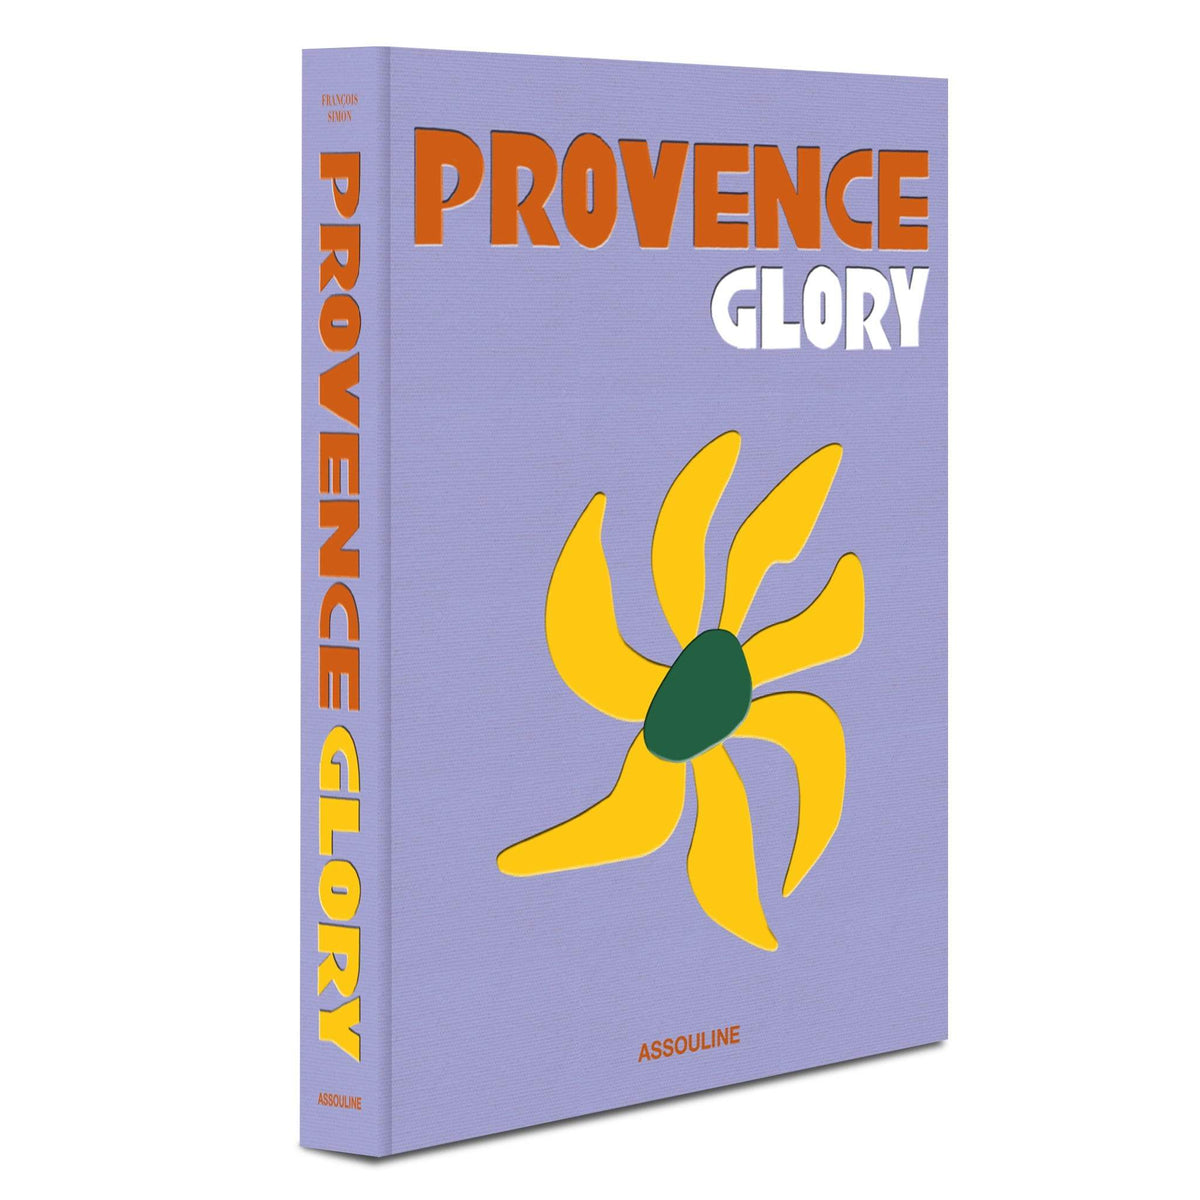 "Provence Glory"